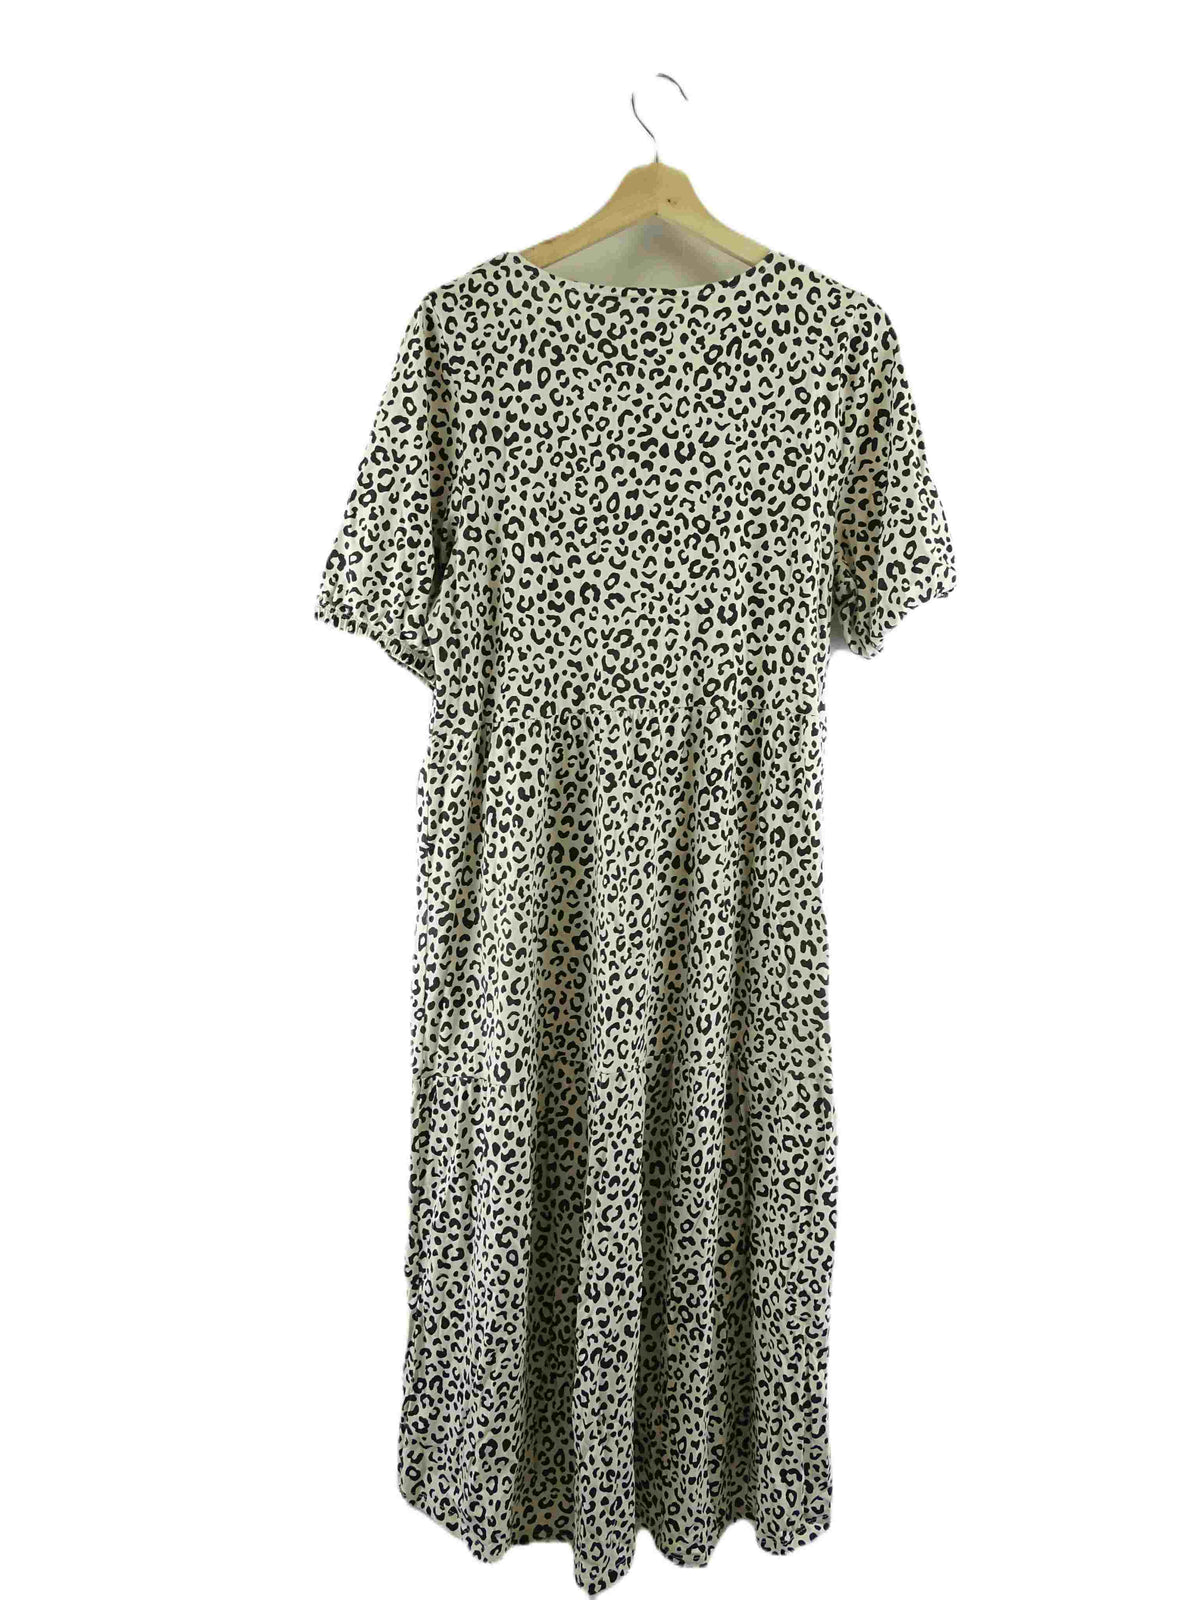 Sussan White and Black Leopard Print Midi Dress M